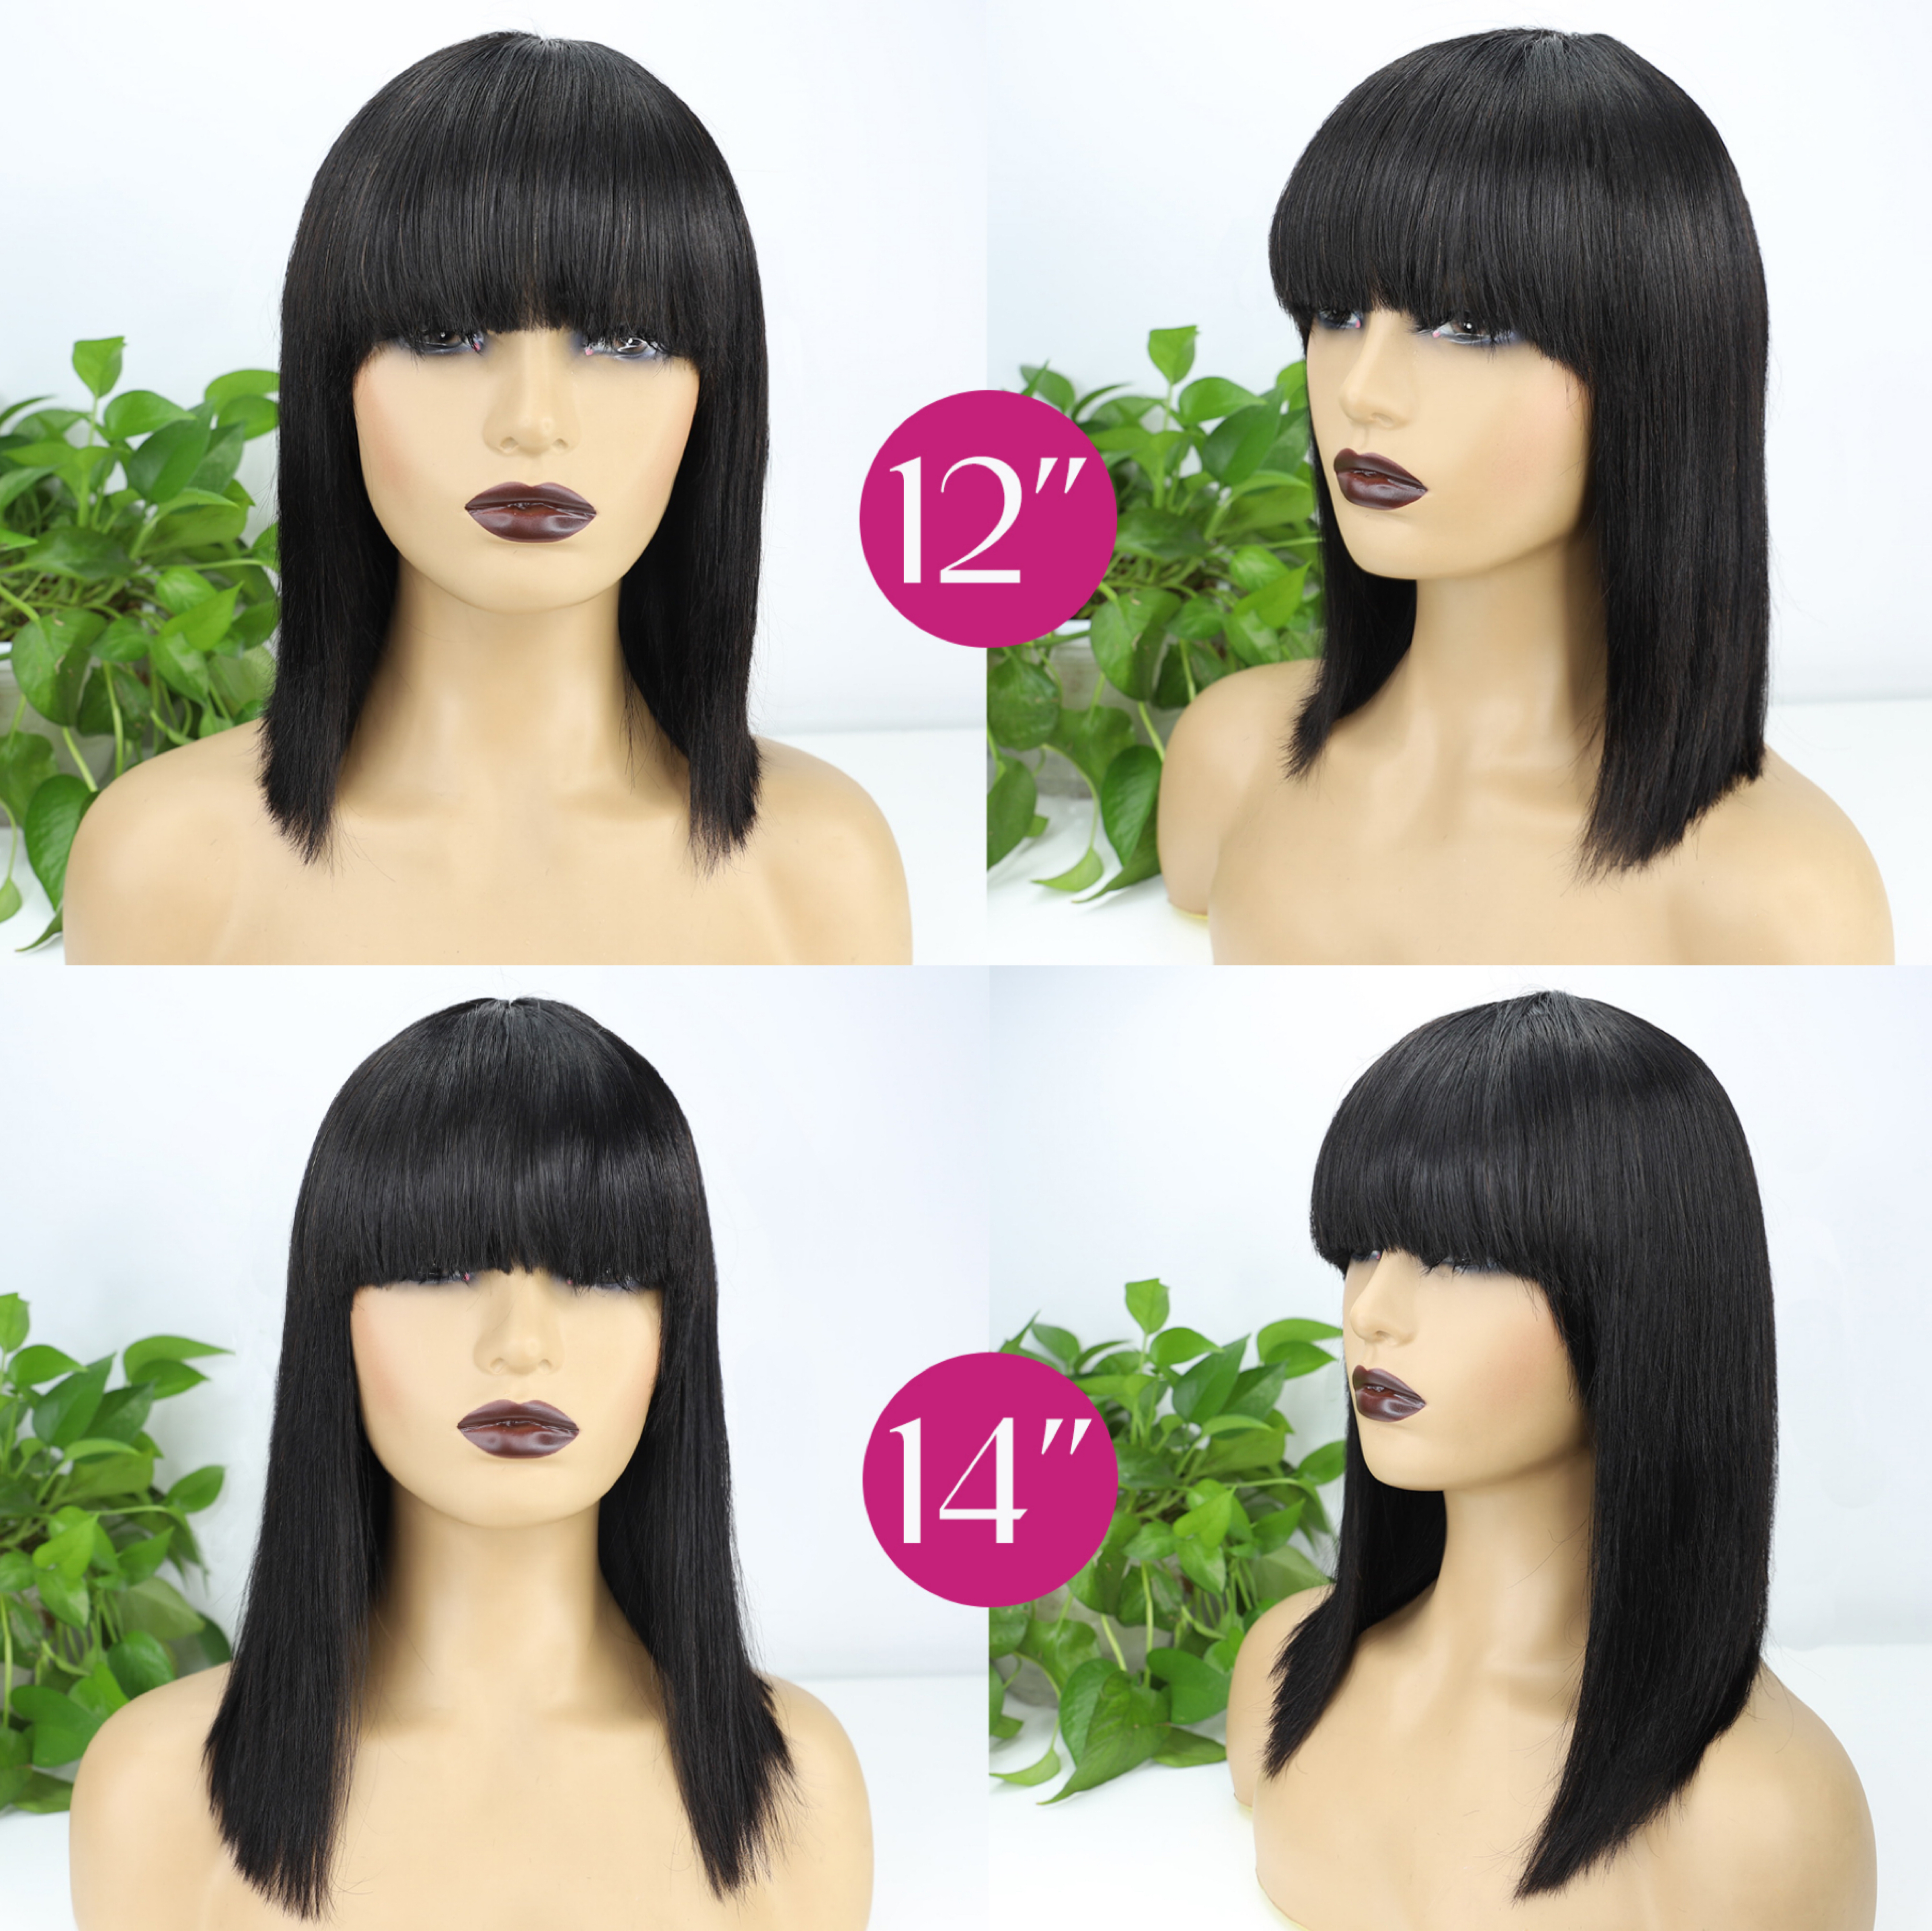 Brazilian Straight Human Hair Wigs Wholesale China Machine Make Wigs Short Human Hair Wigs For Black Women